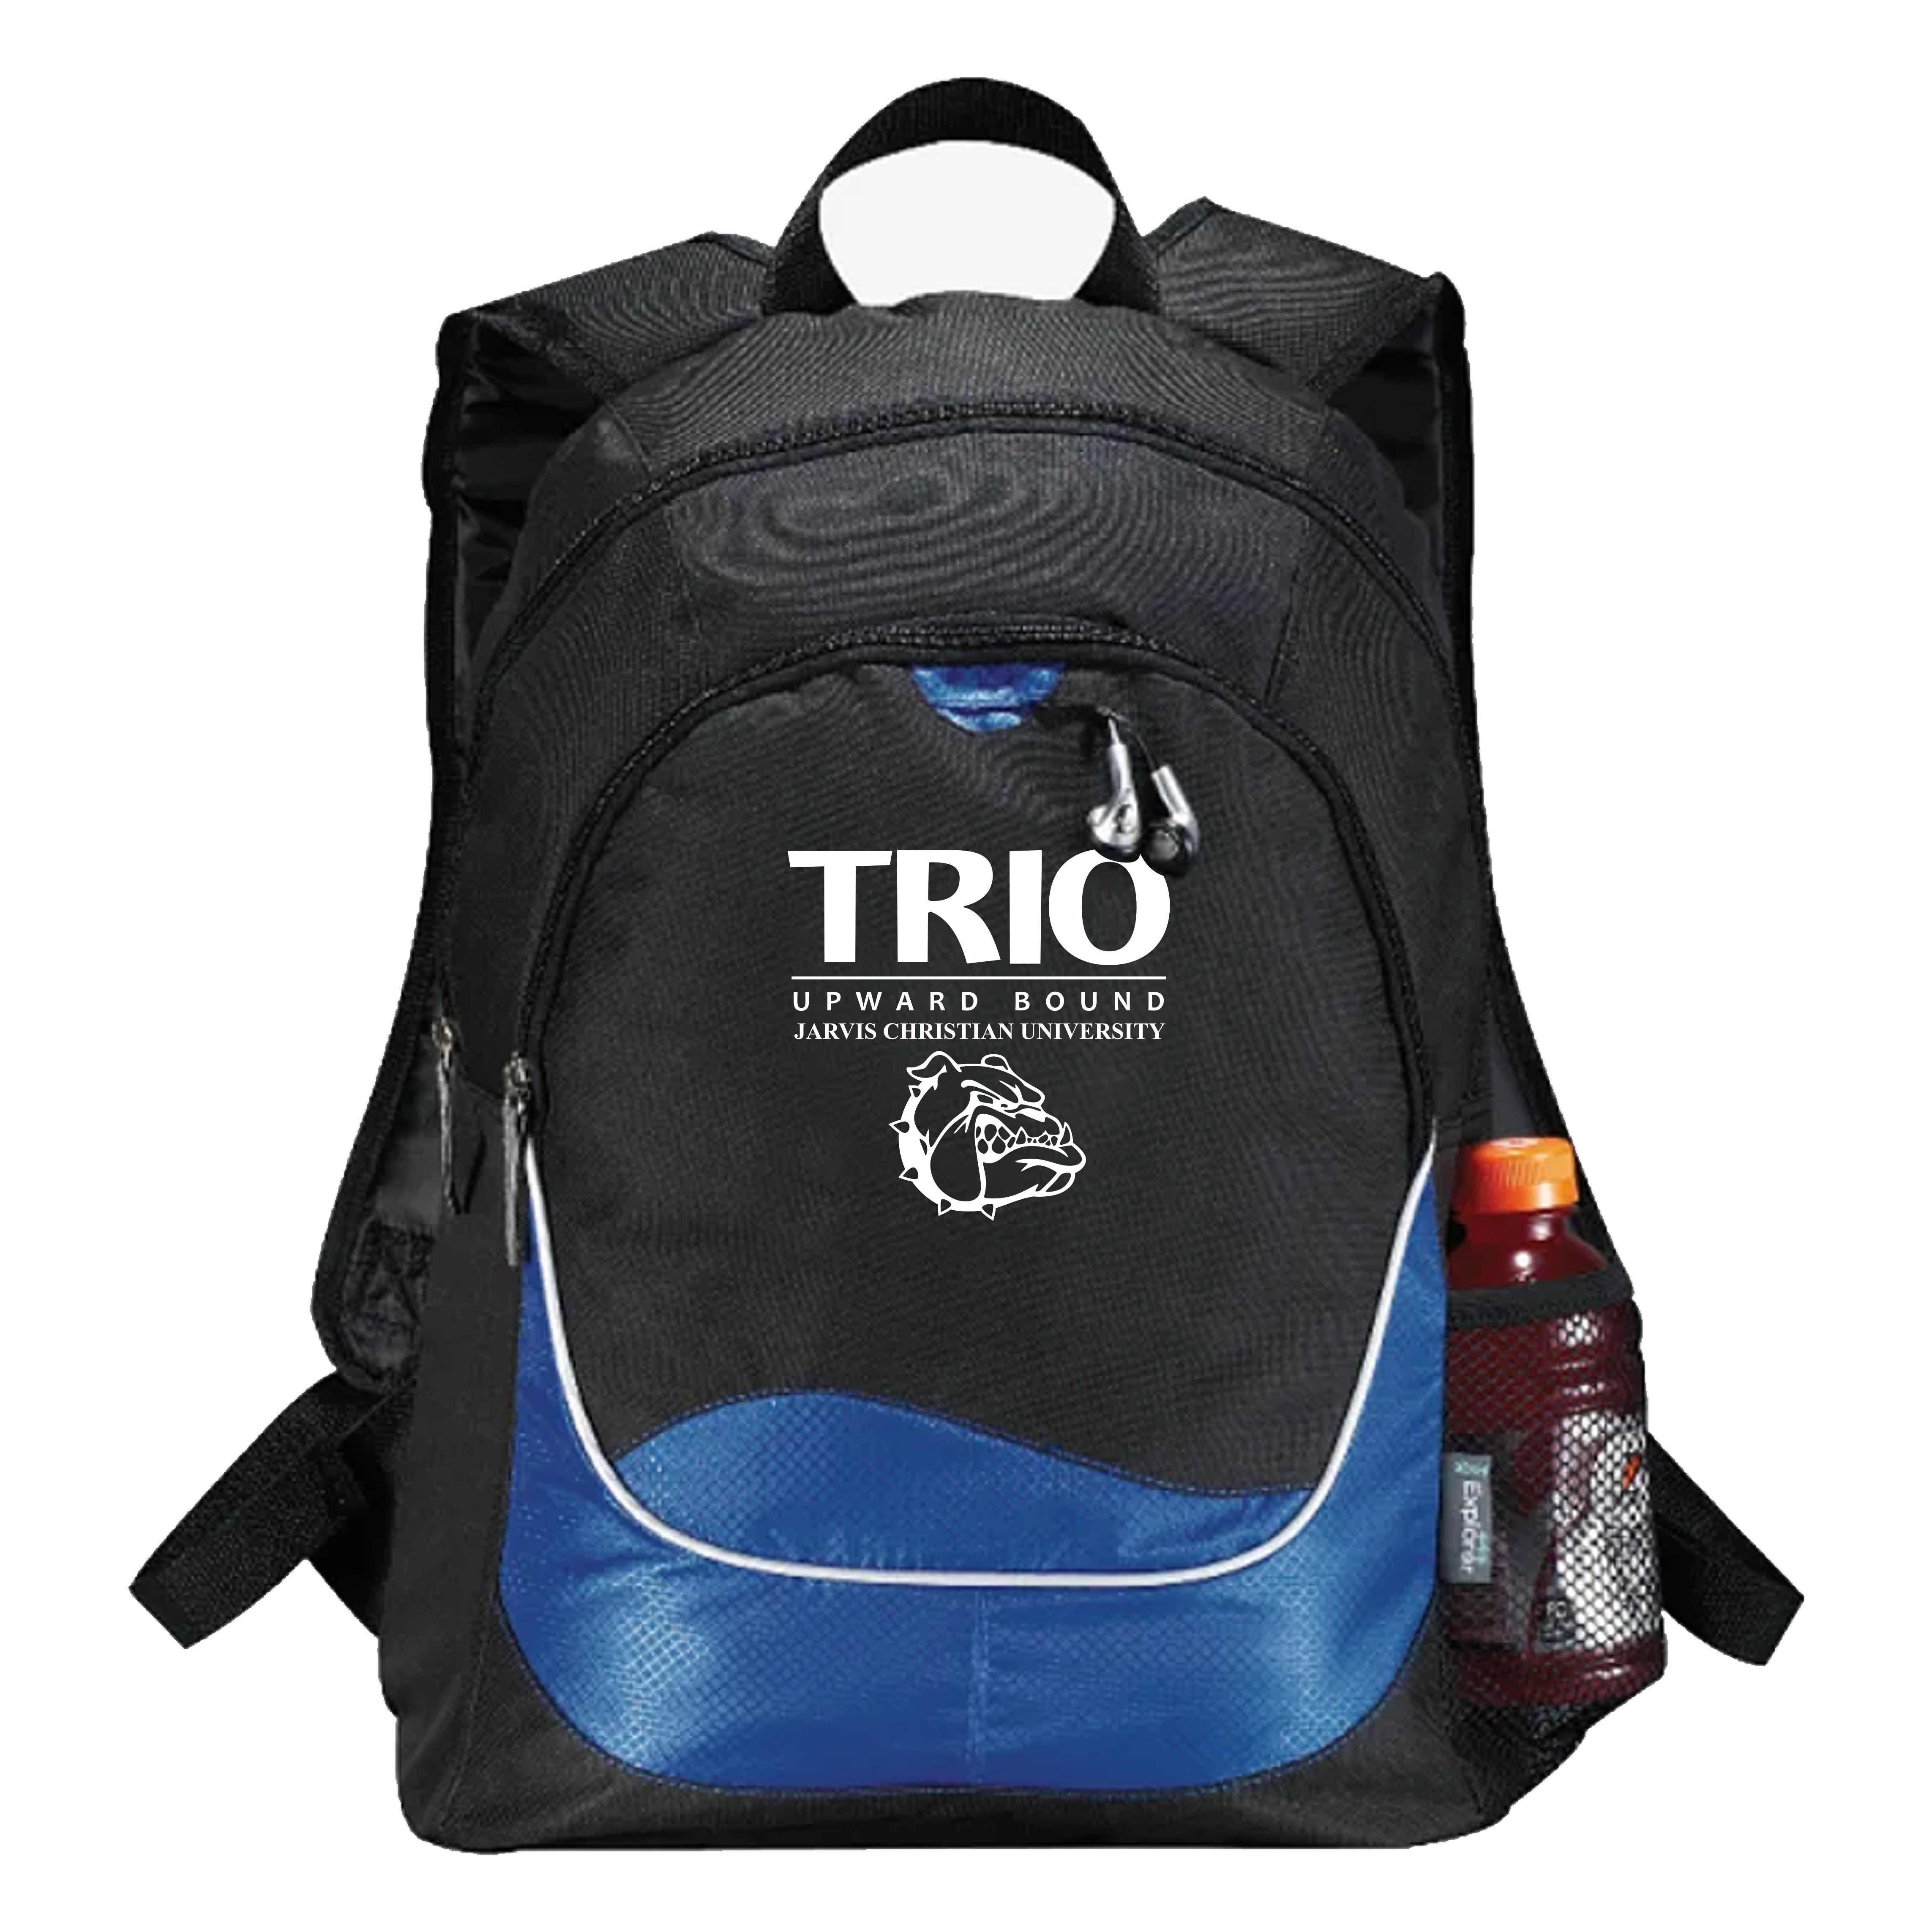 Apollo Royal Blue Backpack – Aquarius Brand